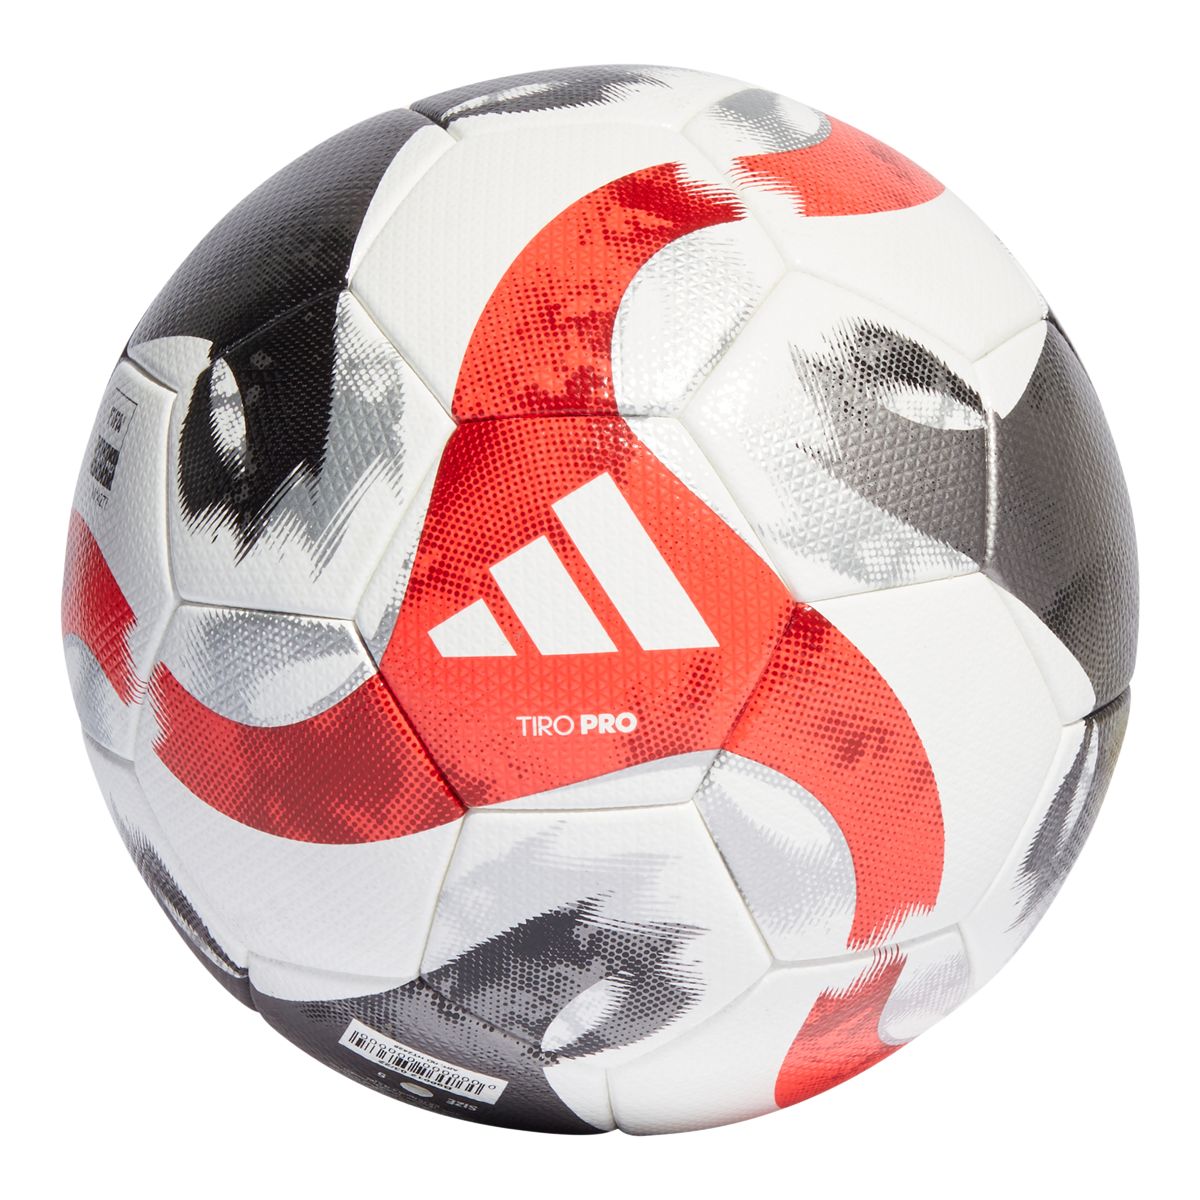 adidas Tiro Pro Senior Soccer Ball - Size 5